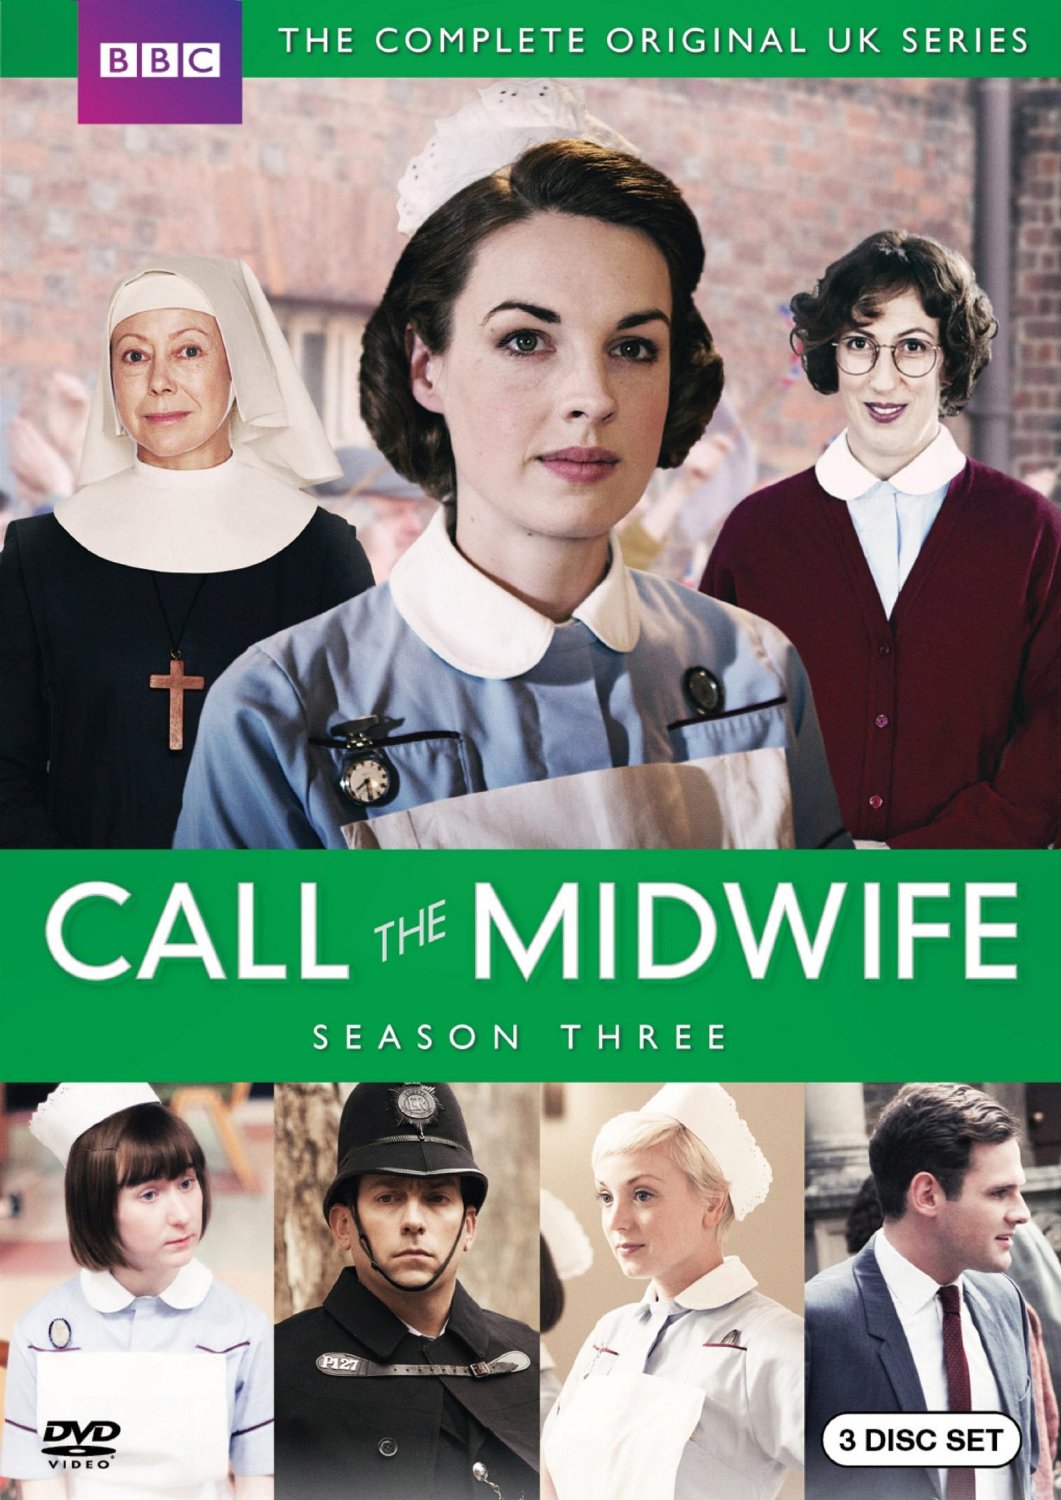 Call the Midwife Seasons 1-3 DVD Boxset